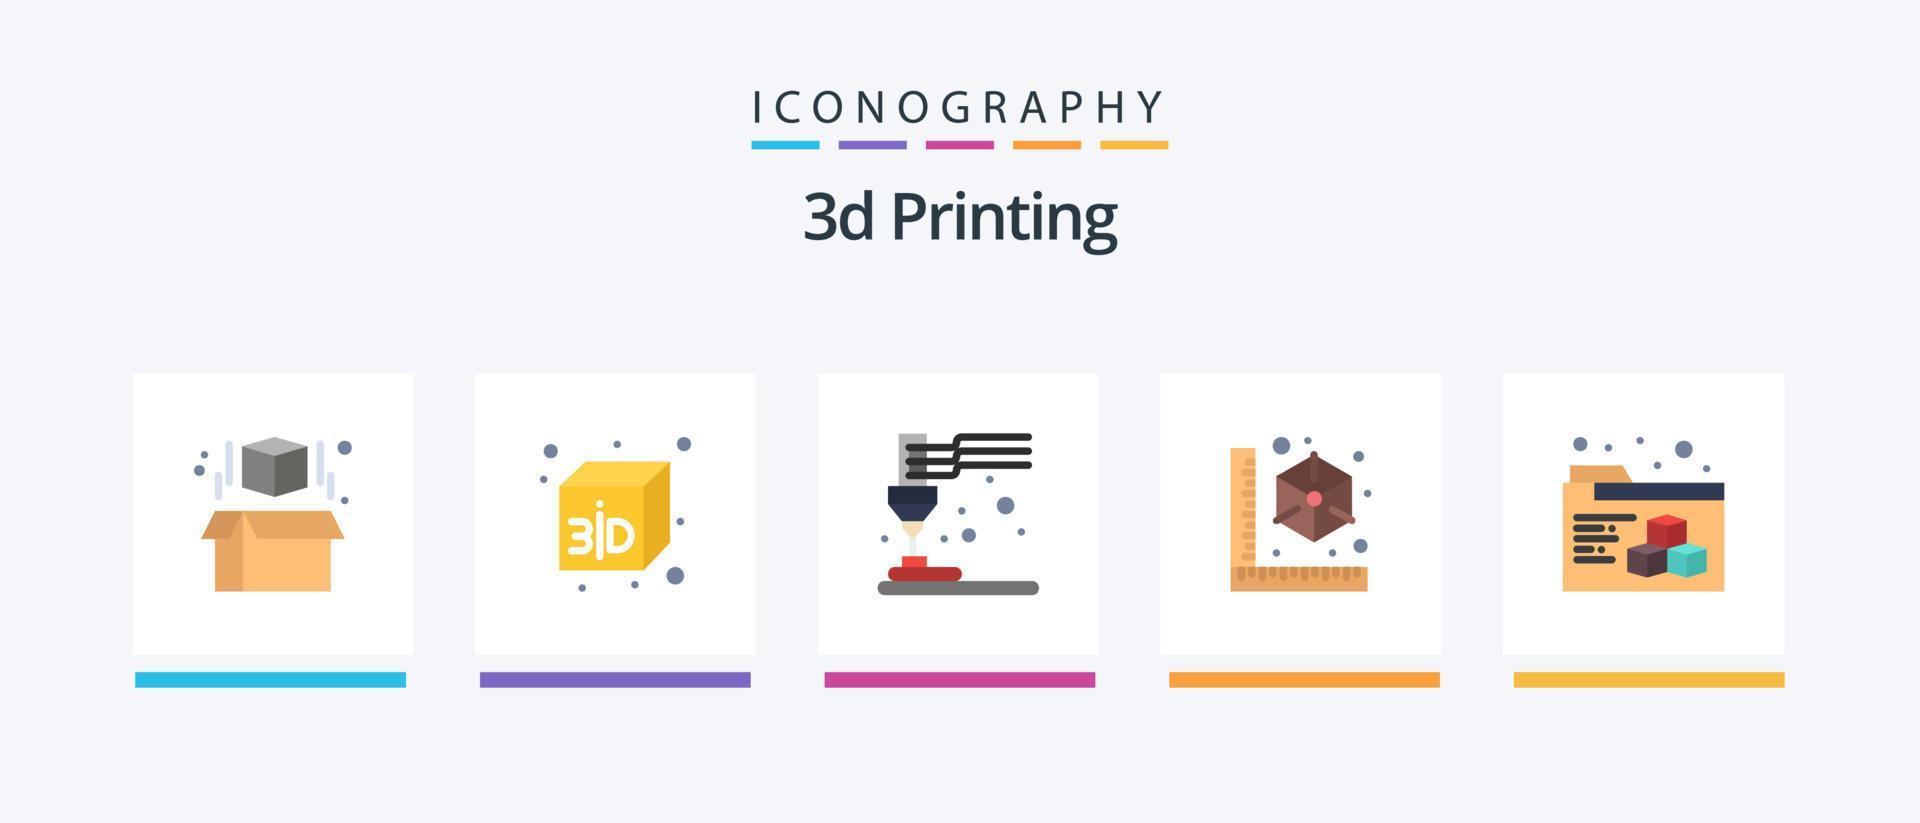 Paquete de 5 iconos planos de impresión 3d que incluye impresión. impresora. equipo. modelo. cubo. diseño de iconos creativos vector